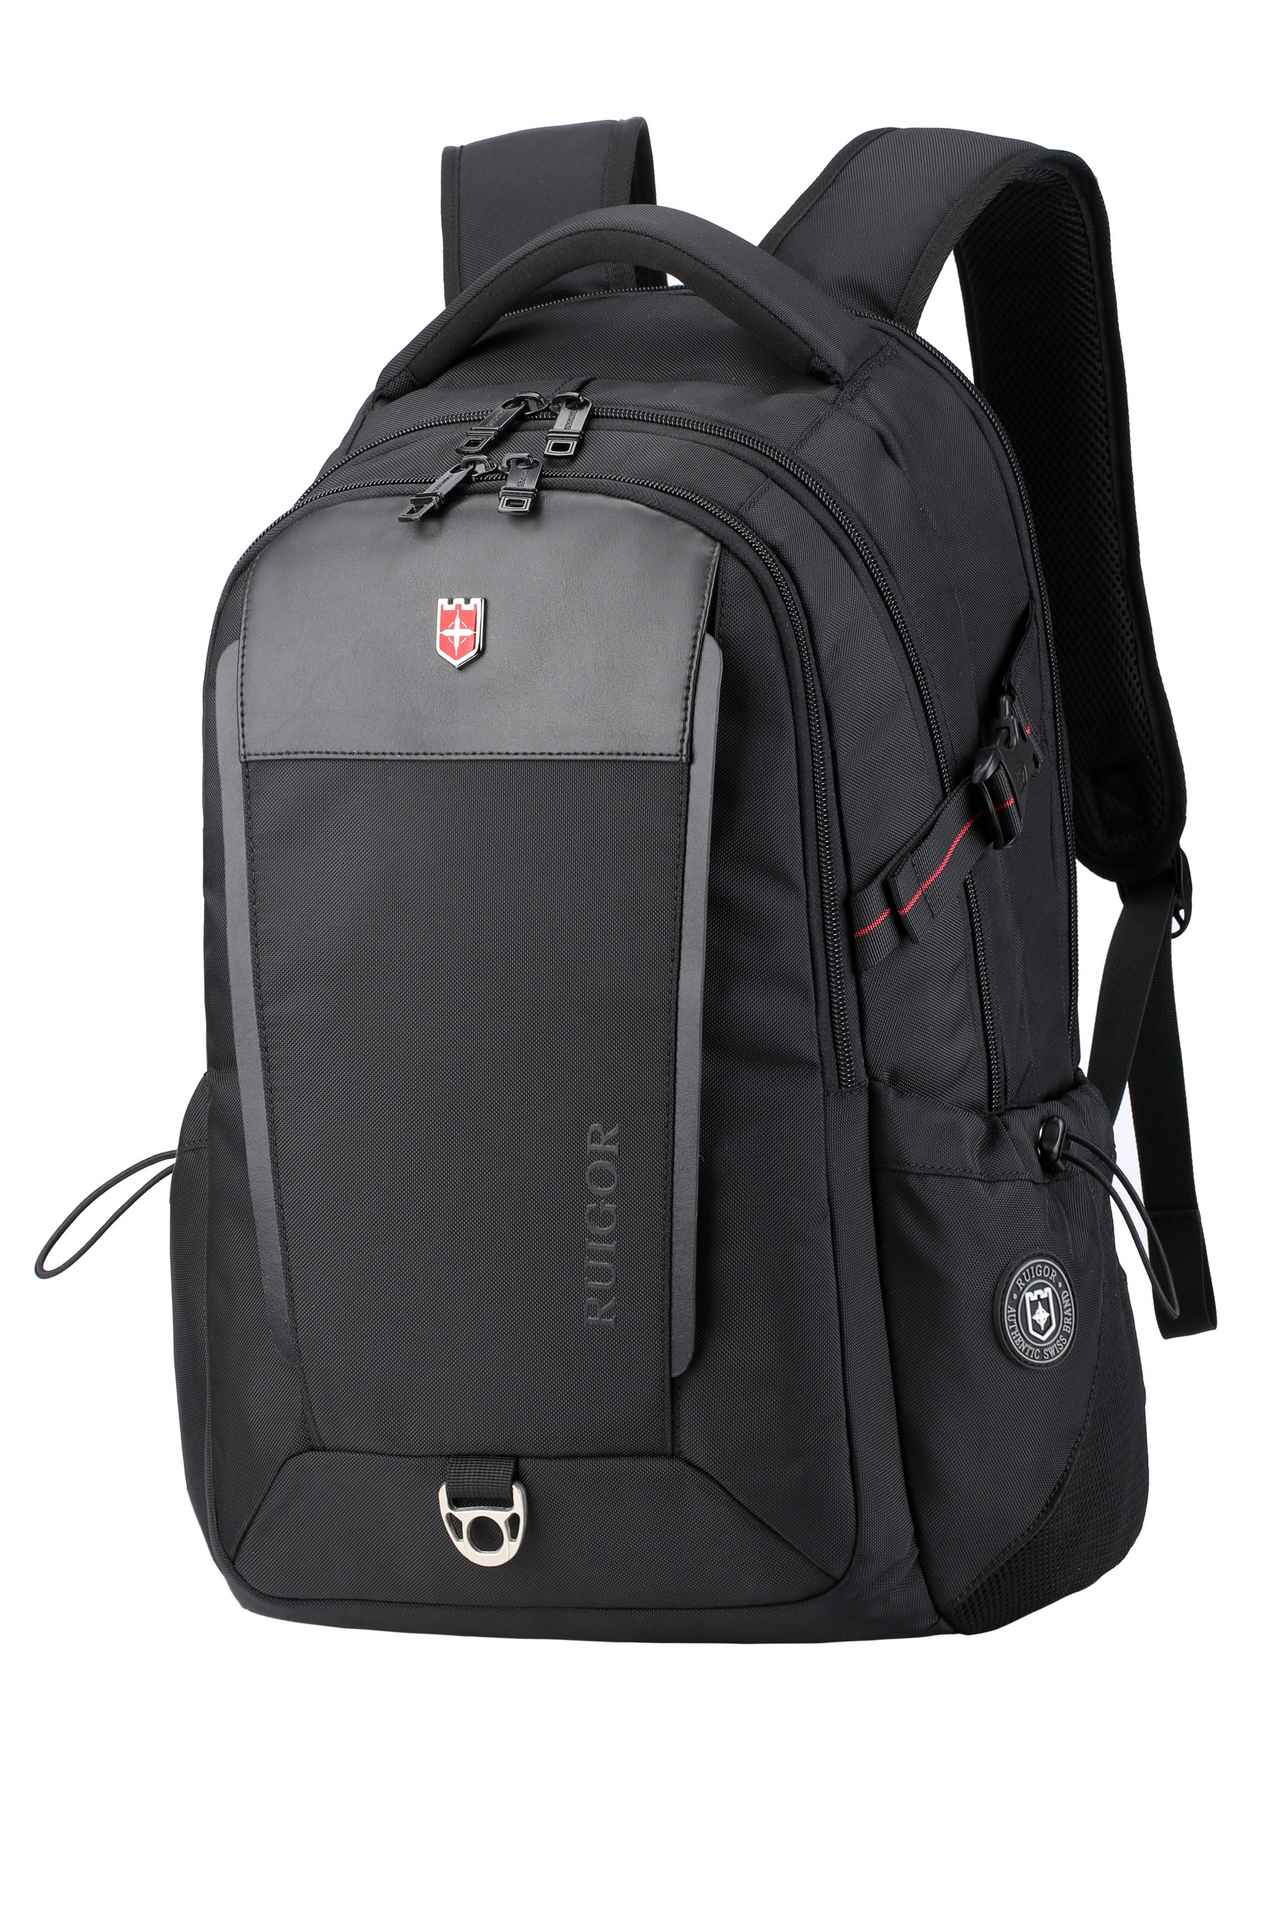 RUIGOR EXECUTIVE 26 Luxury Backpack Black